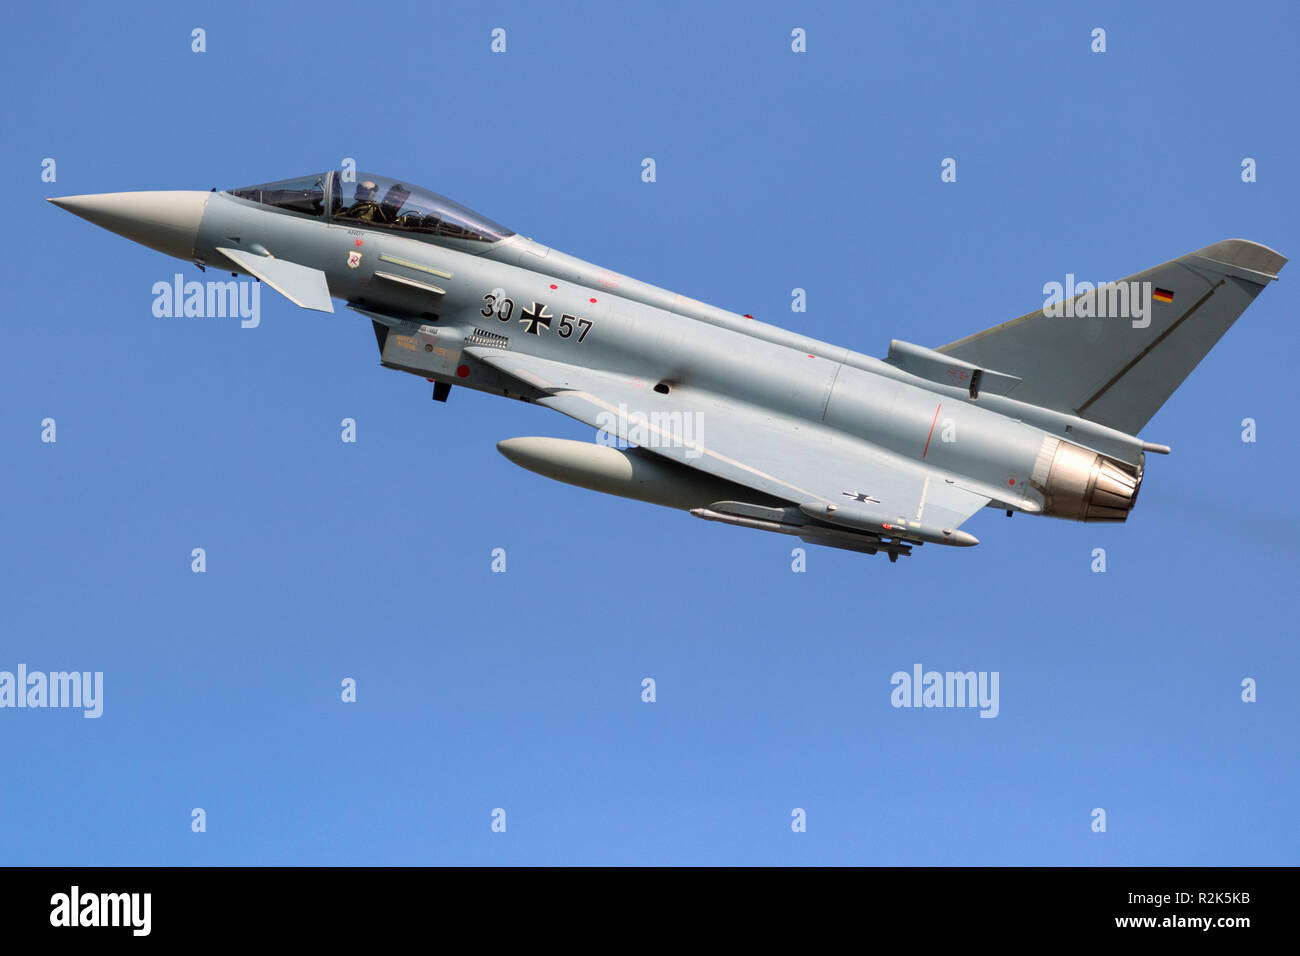 LEEUWARDEN, THE NETERLANDS - APR 19, 2018: German Air Force Eurofighter typhoon fighter jet aircraft in flight. Stock Photo